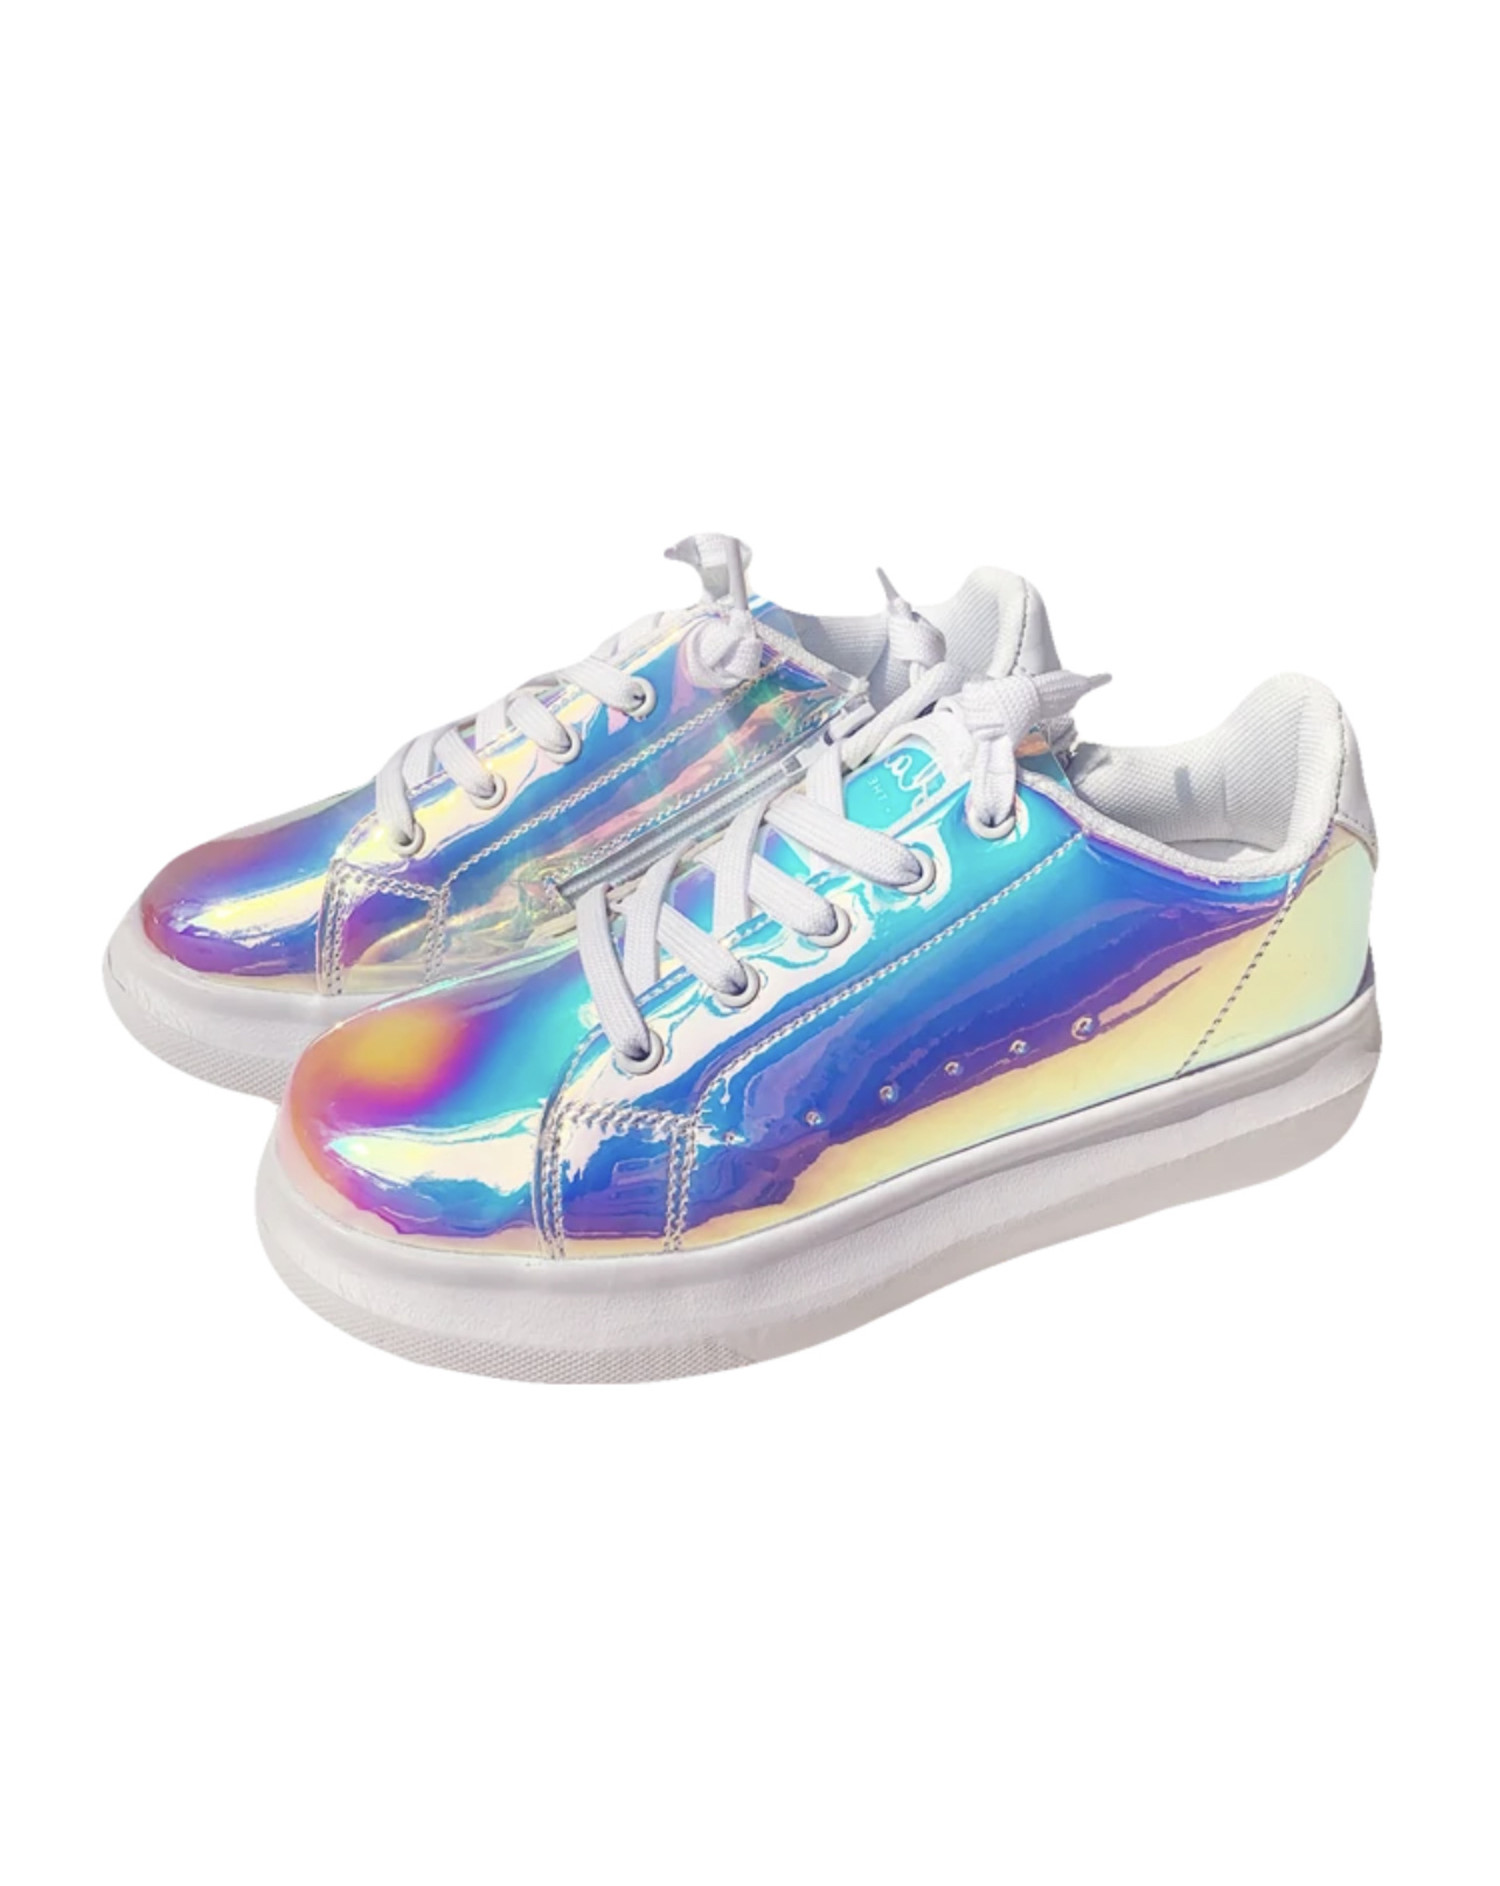 Lola Hologram Sneaker - Calakids